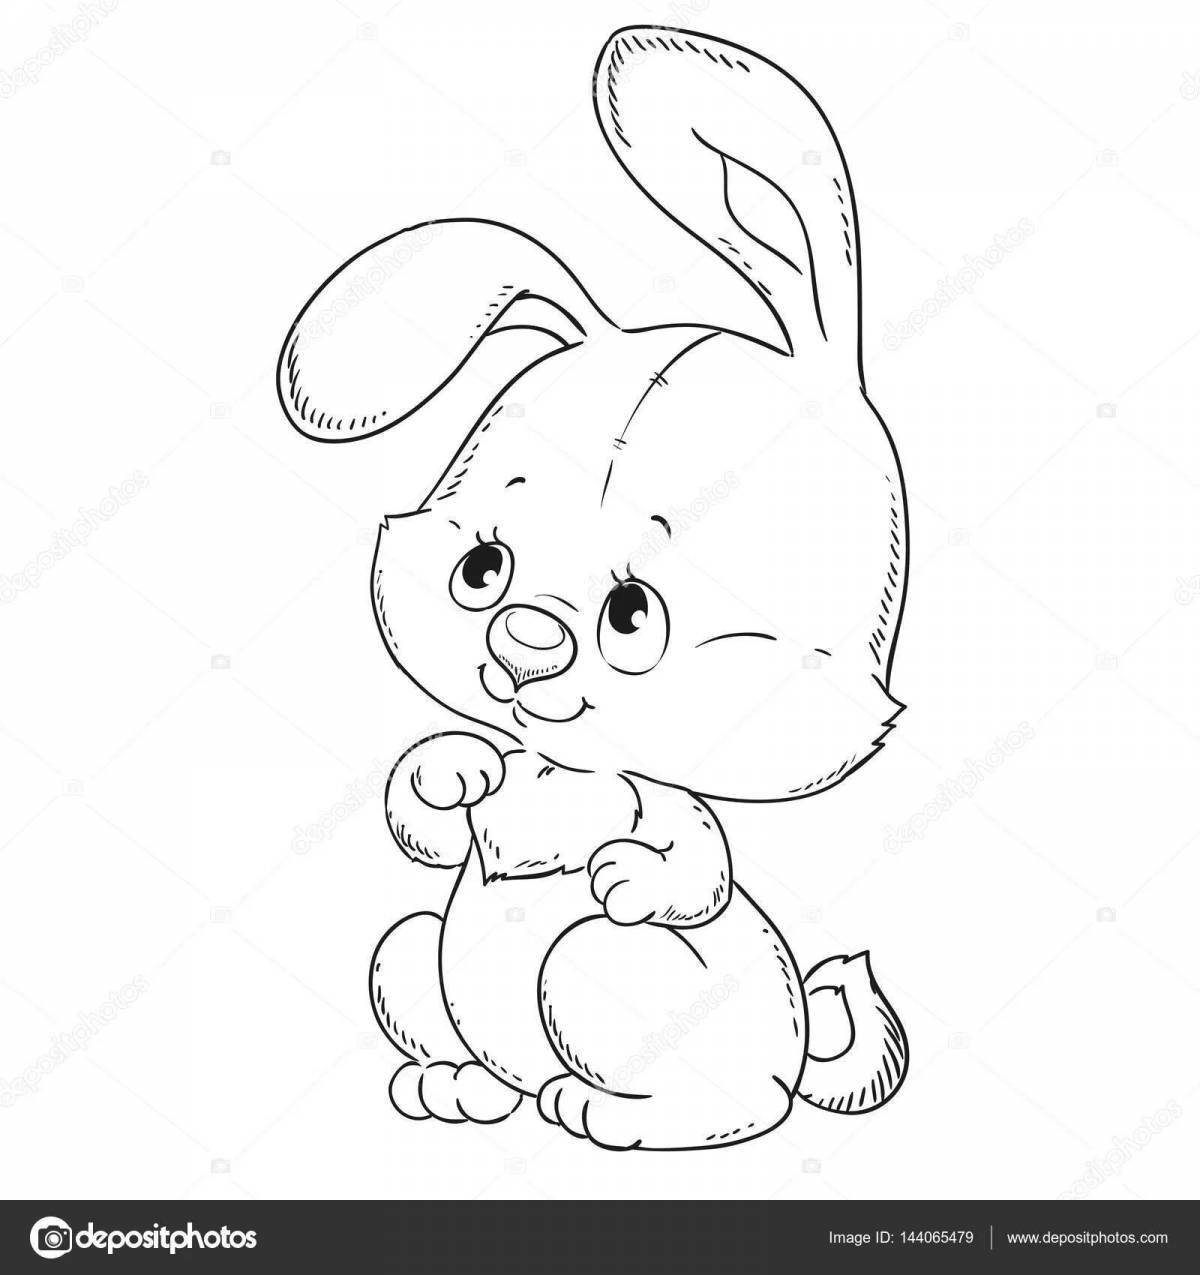 Nimble rabbit with balls